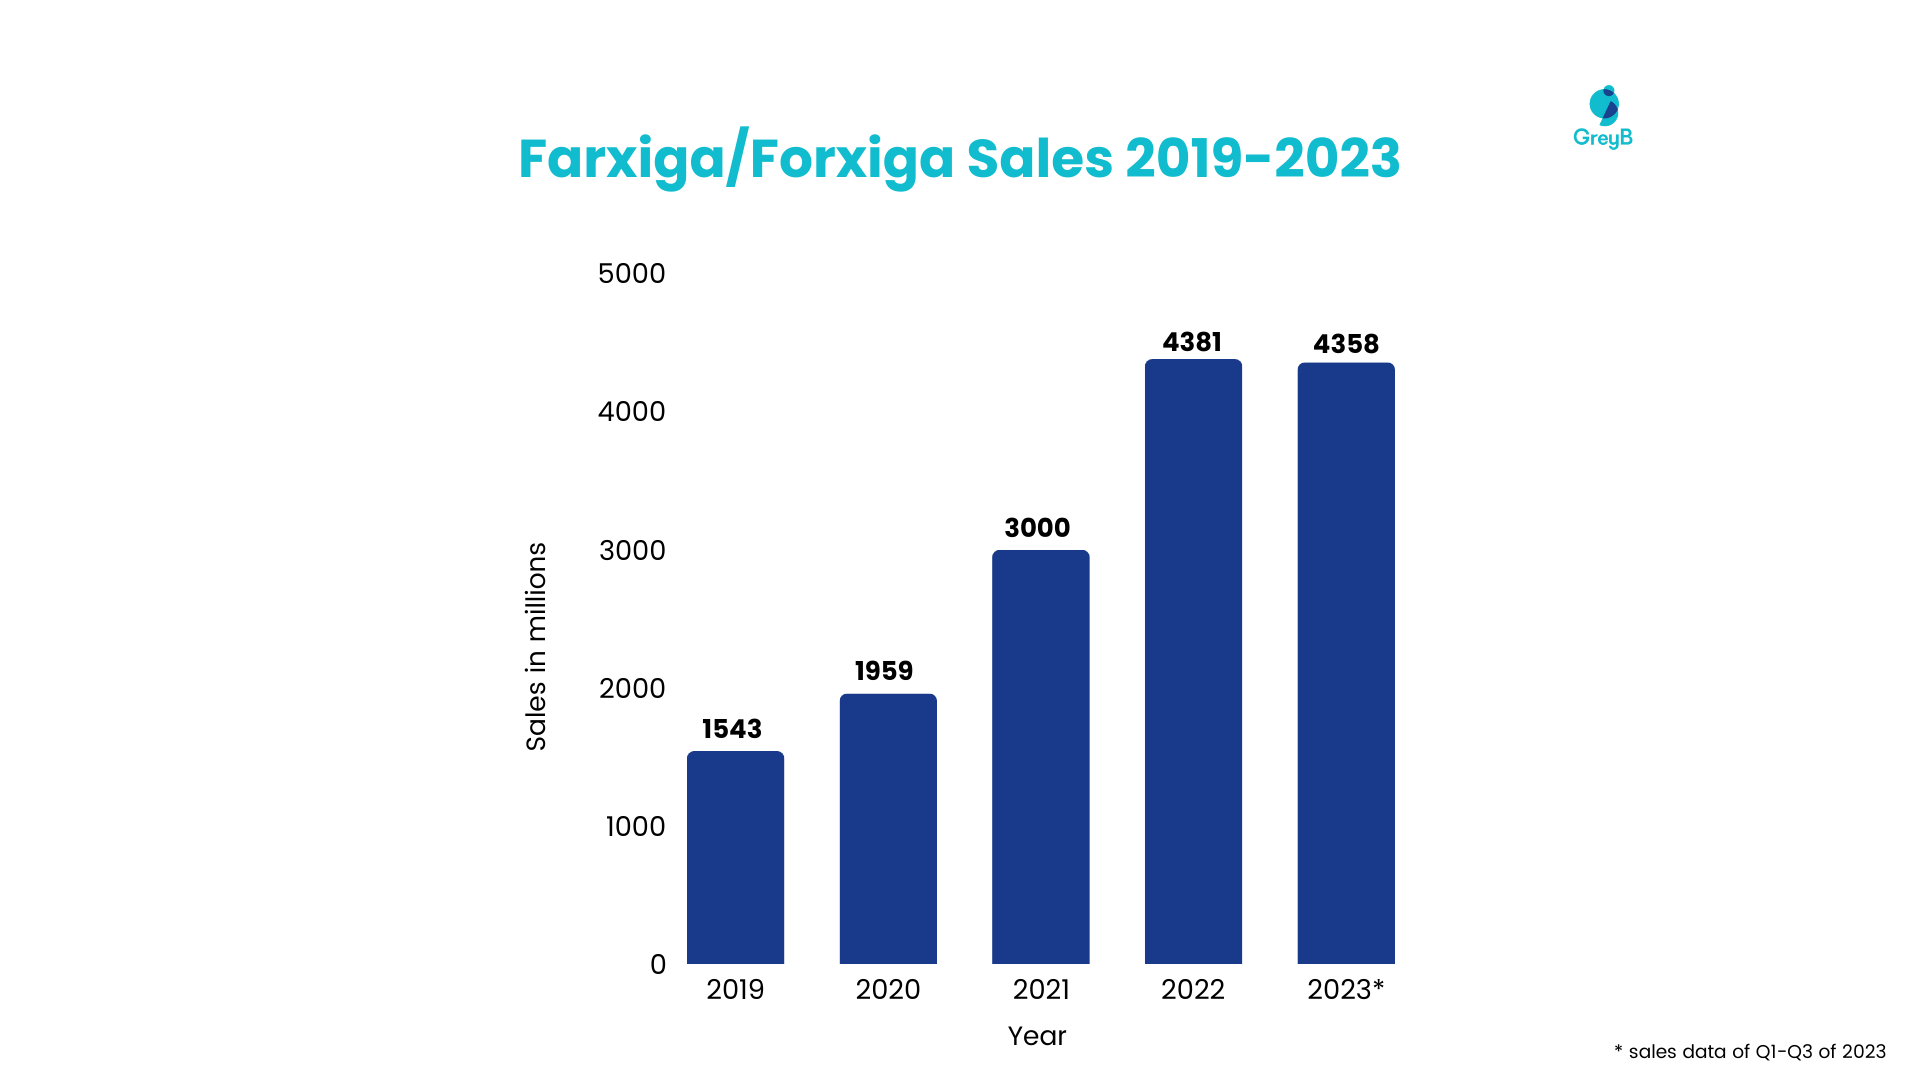 Farxiga/Forxiga Sales from 2019 to 2023